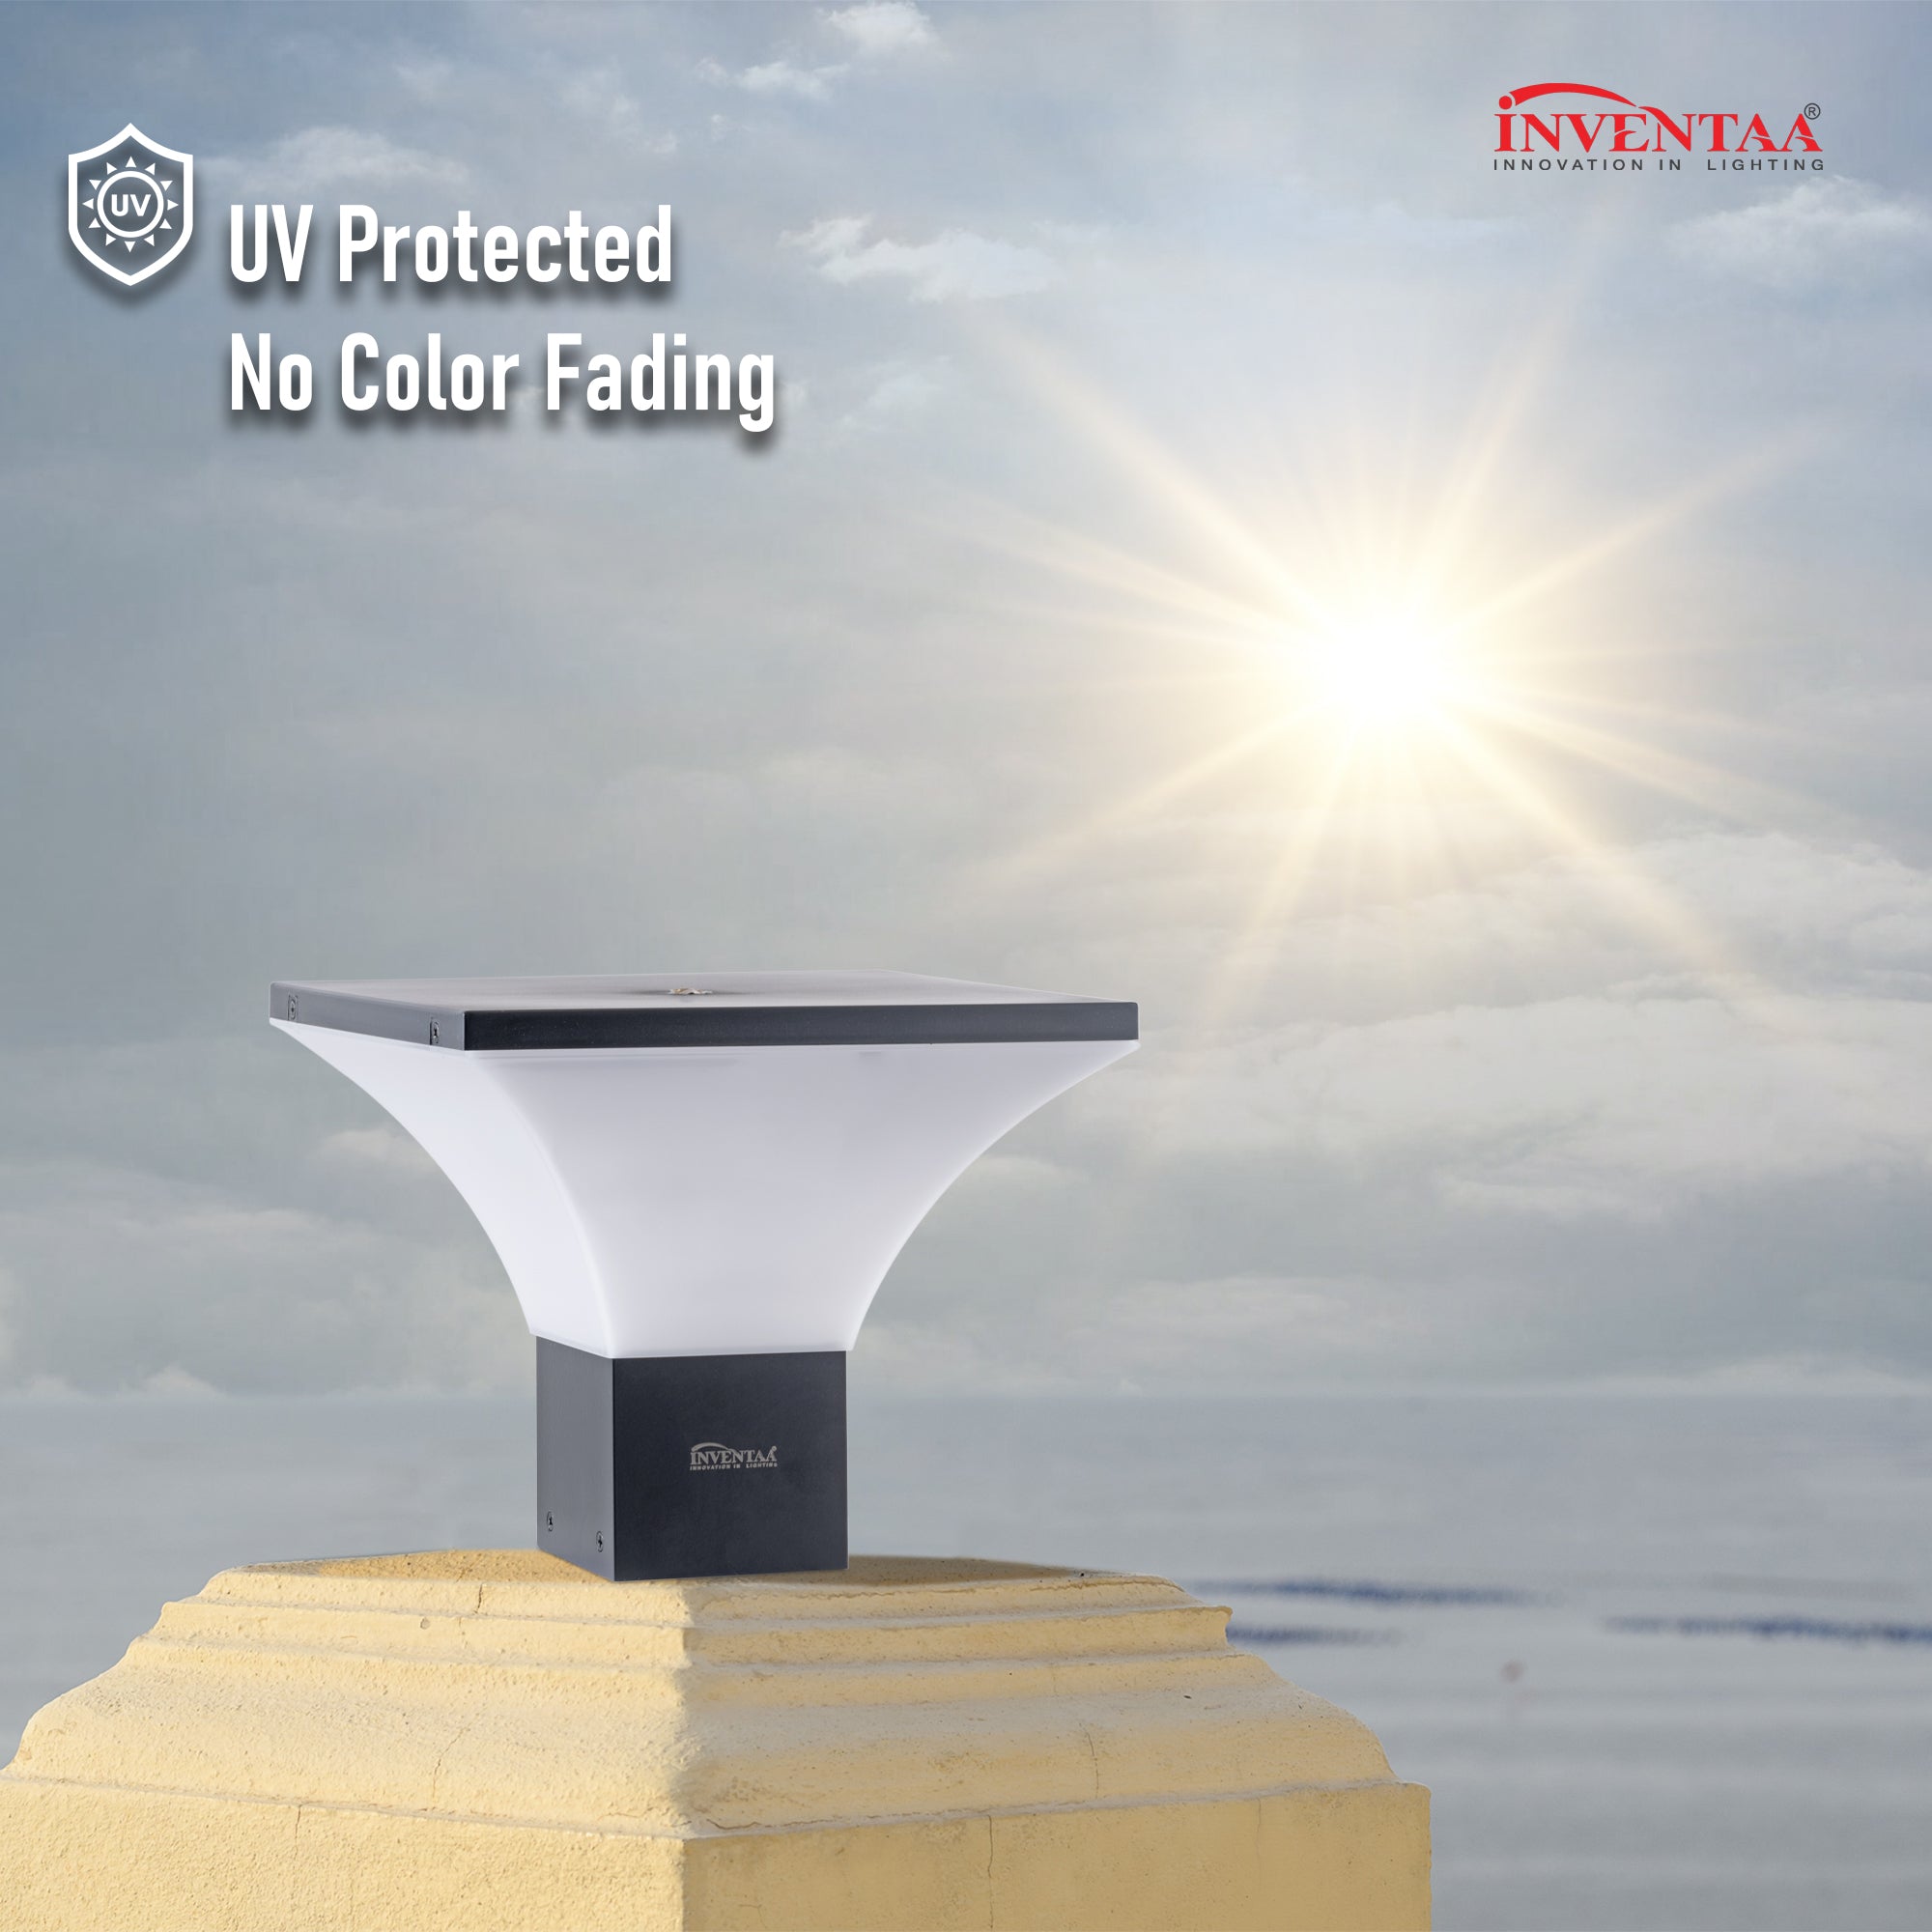 UV Protected Bloom LED Gate Light #bulb options_cool